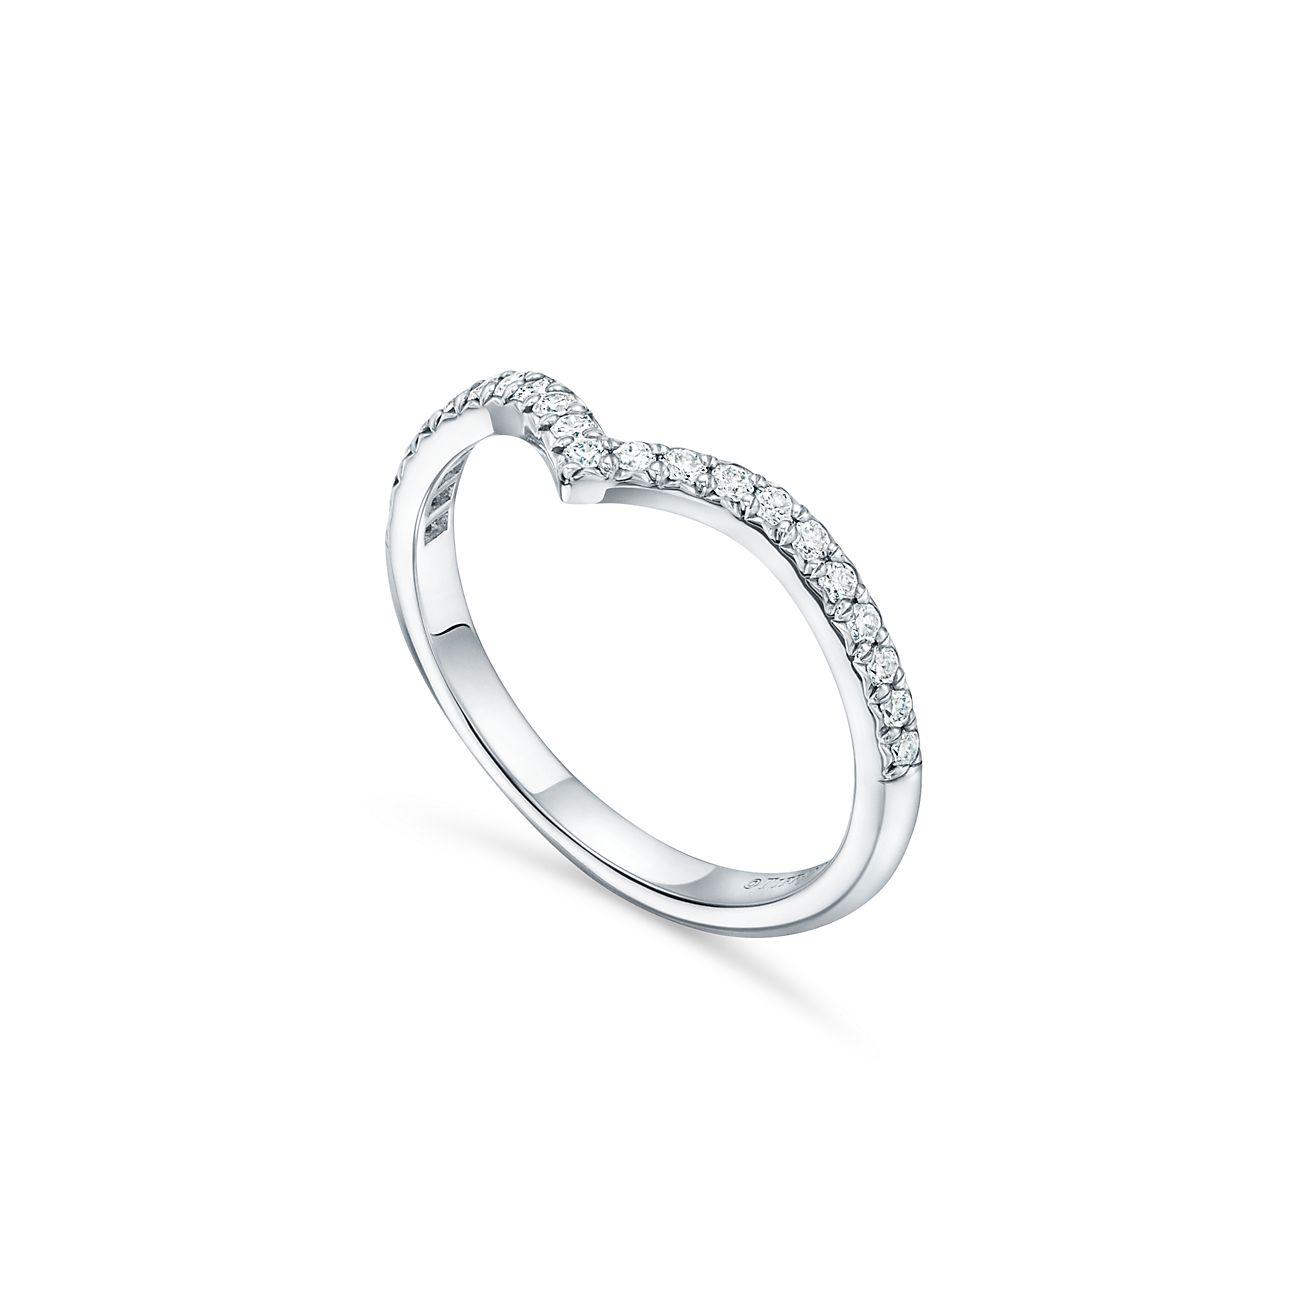 Tiffany Soleste V ring in platinum with 